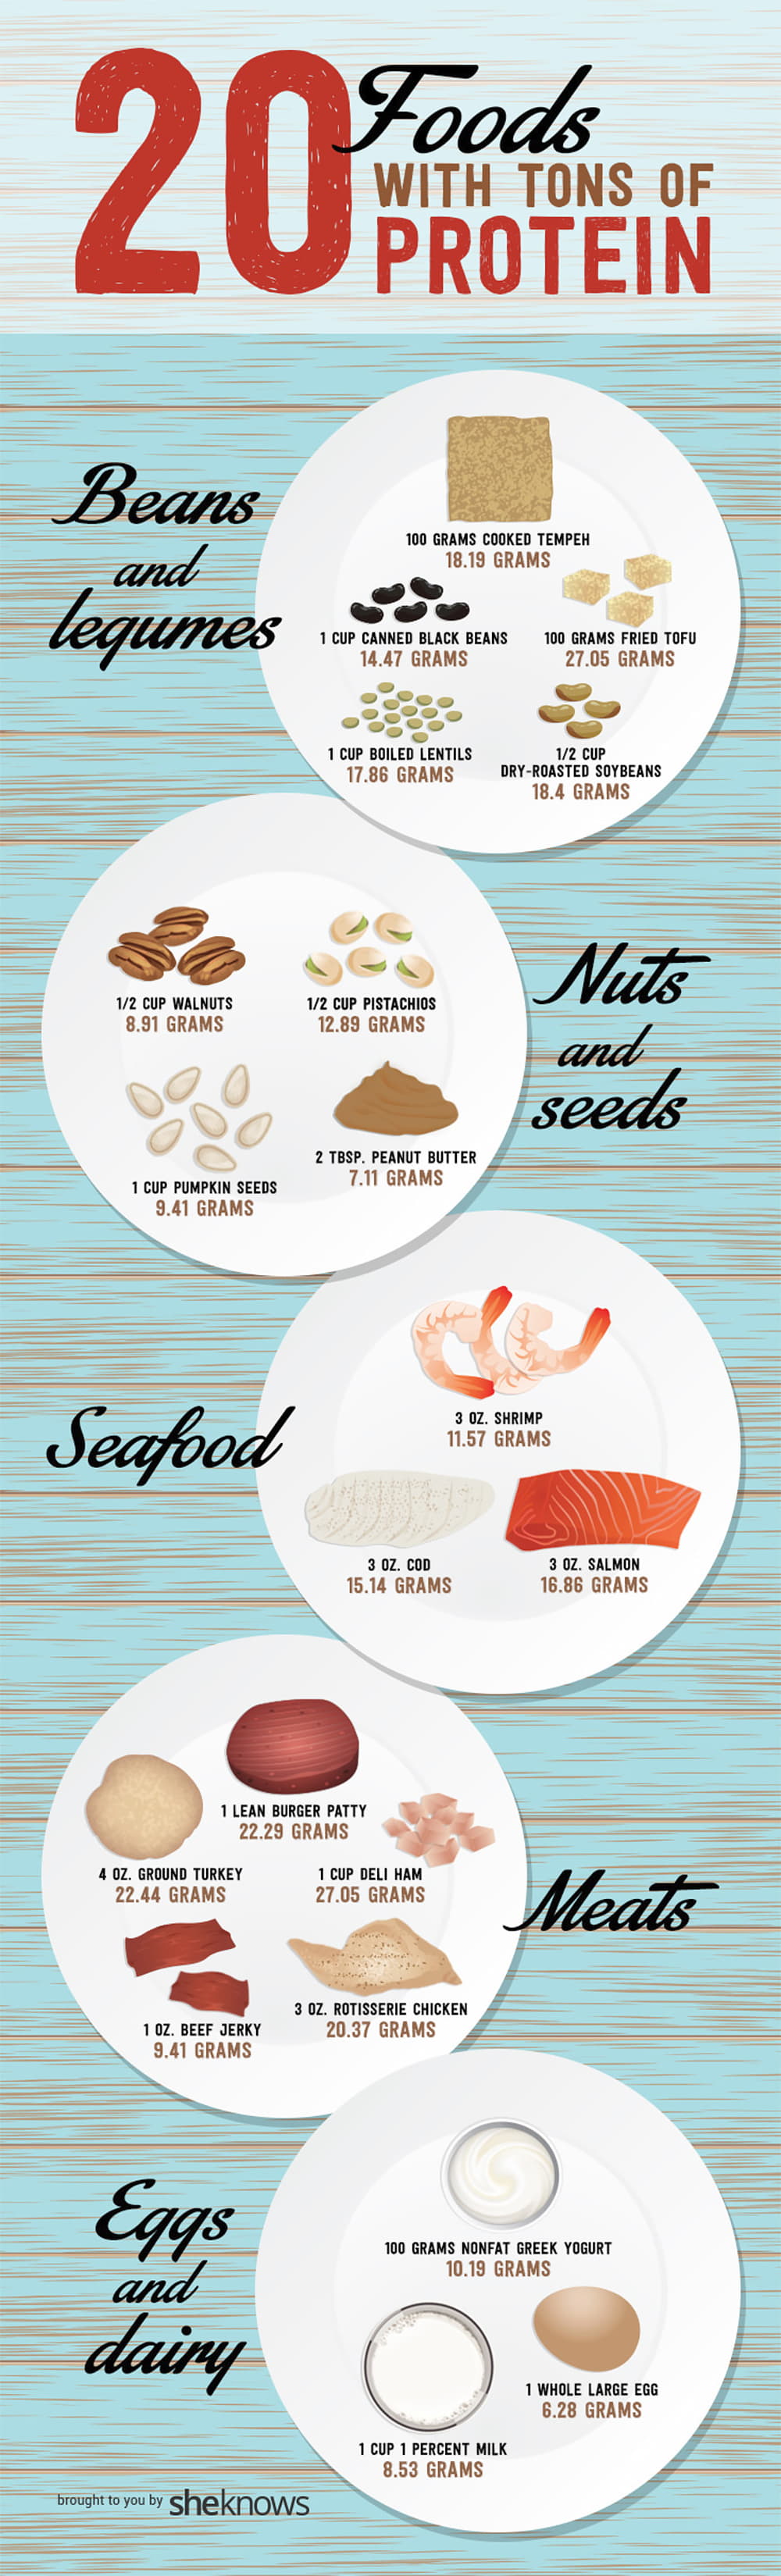 Proteinreiche Lebensmittel Infografik